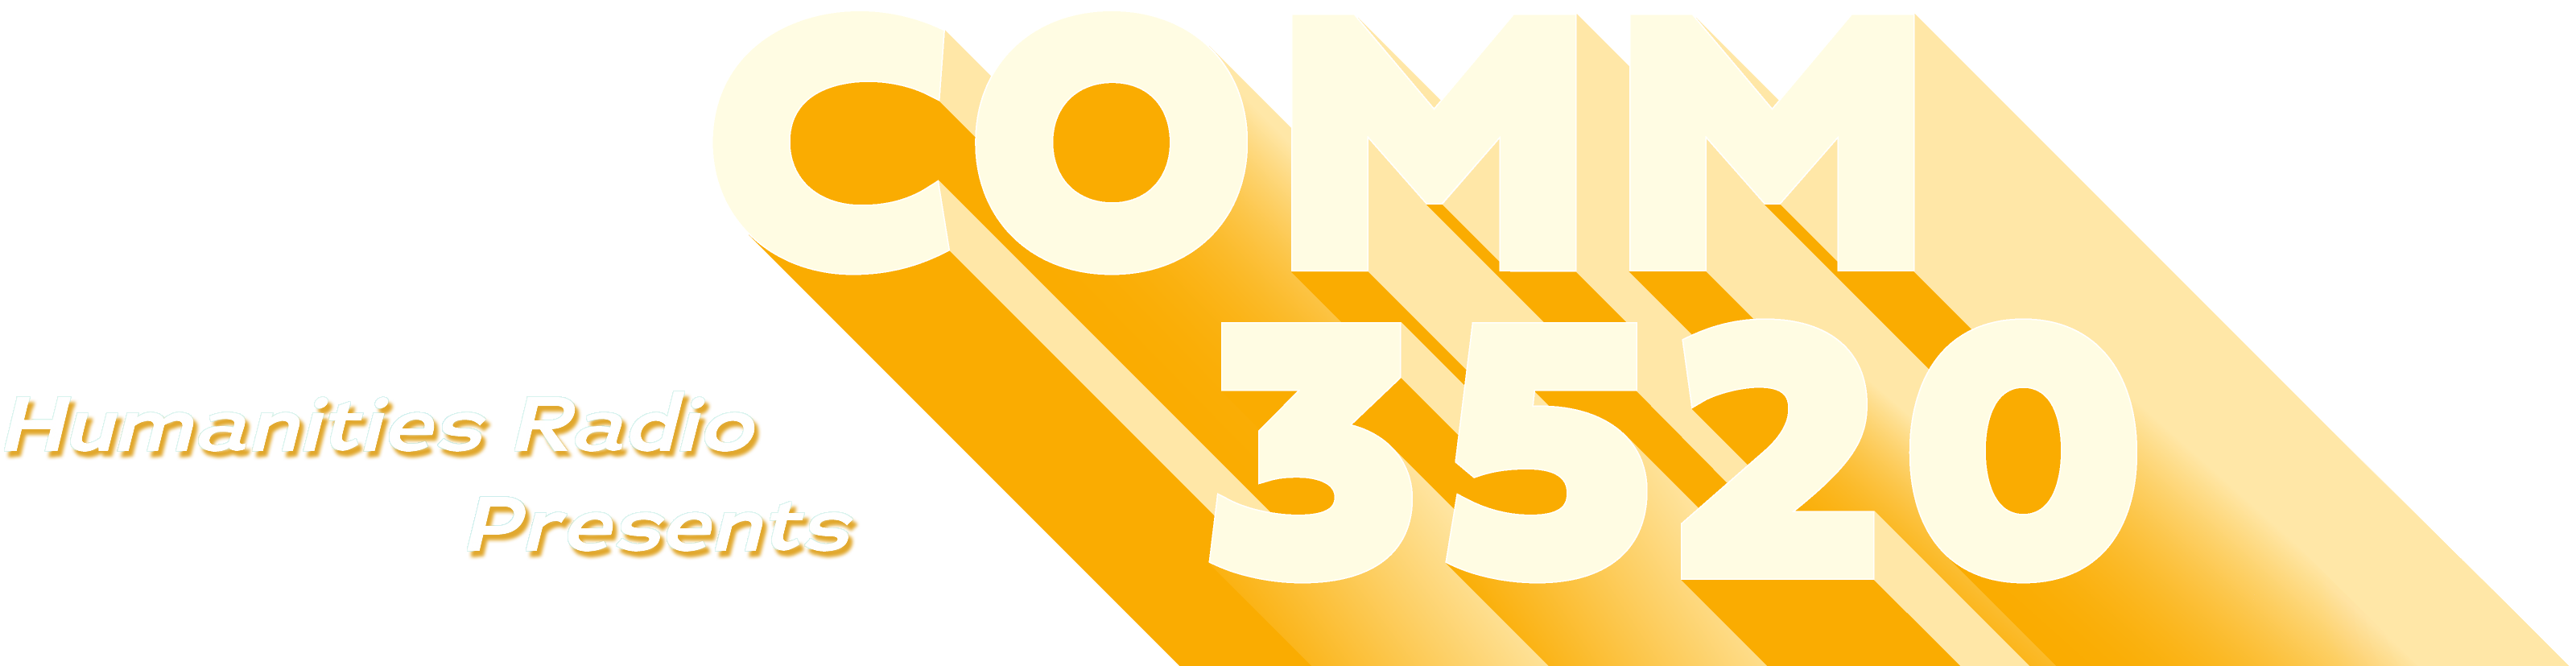 Humanities Radio Presents COMM 4670